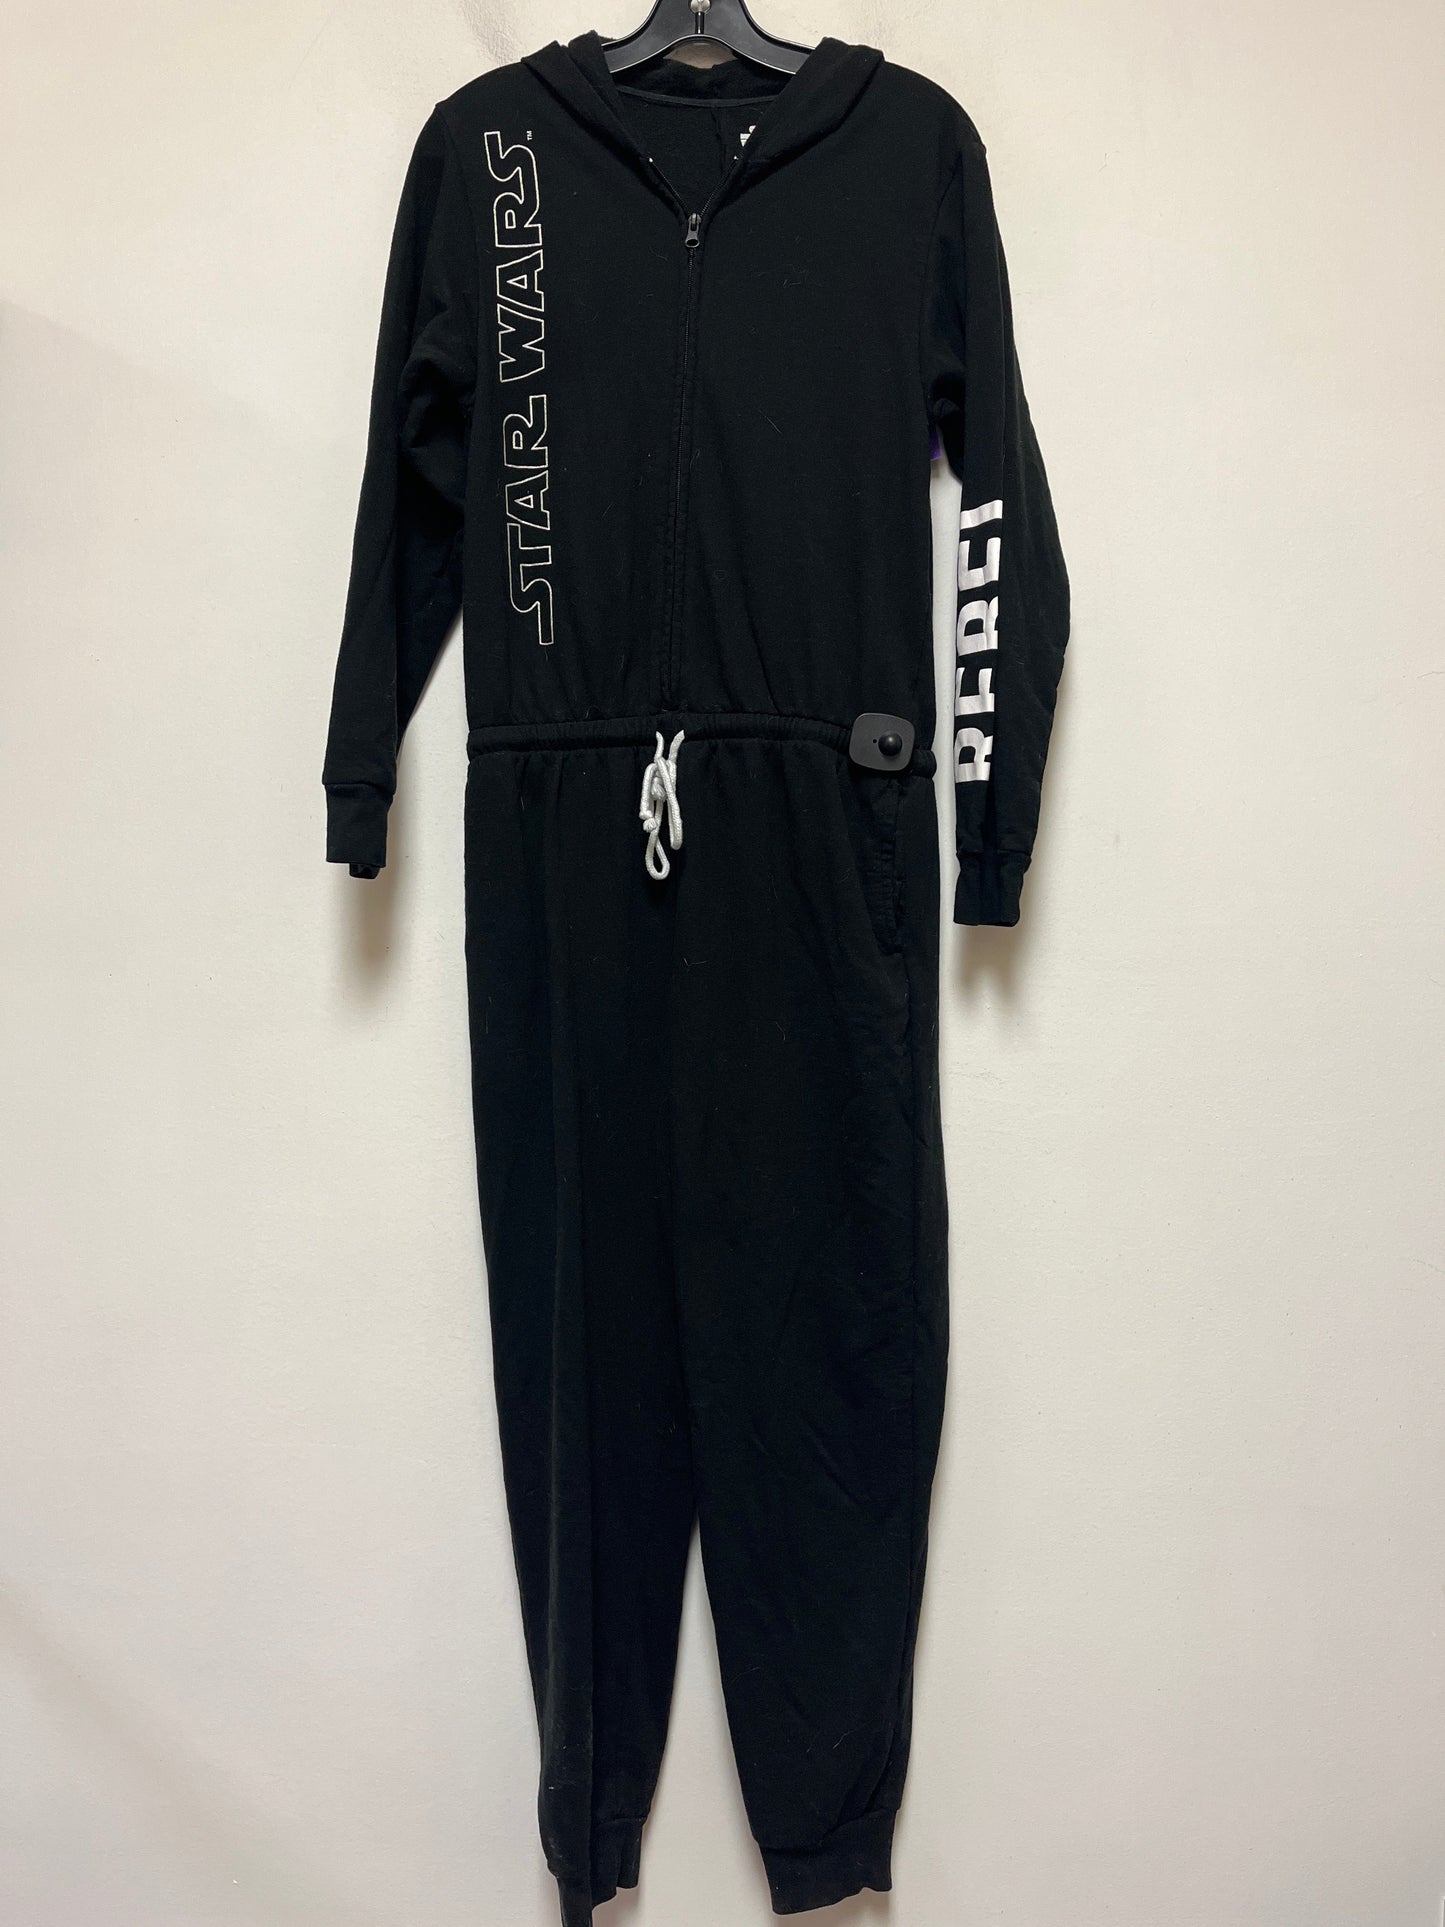 Black Jumpsuit Discreet Wear, Size S